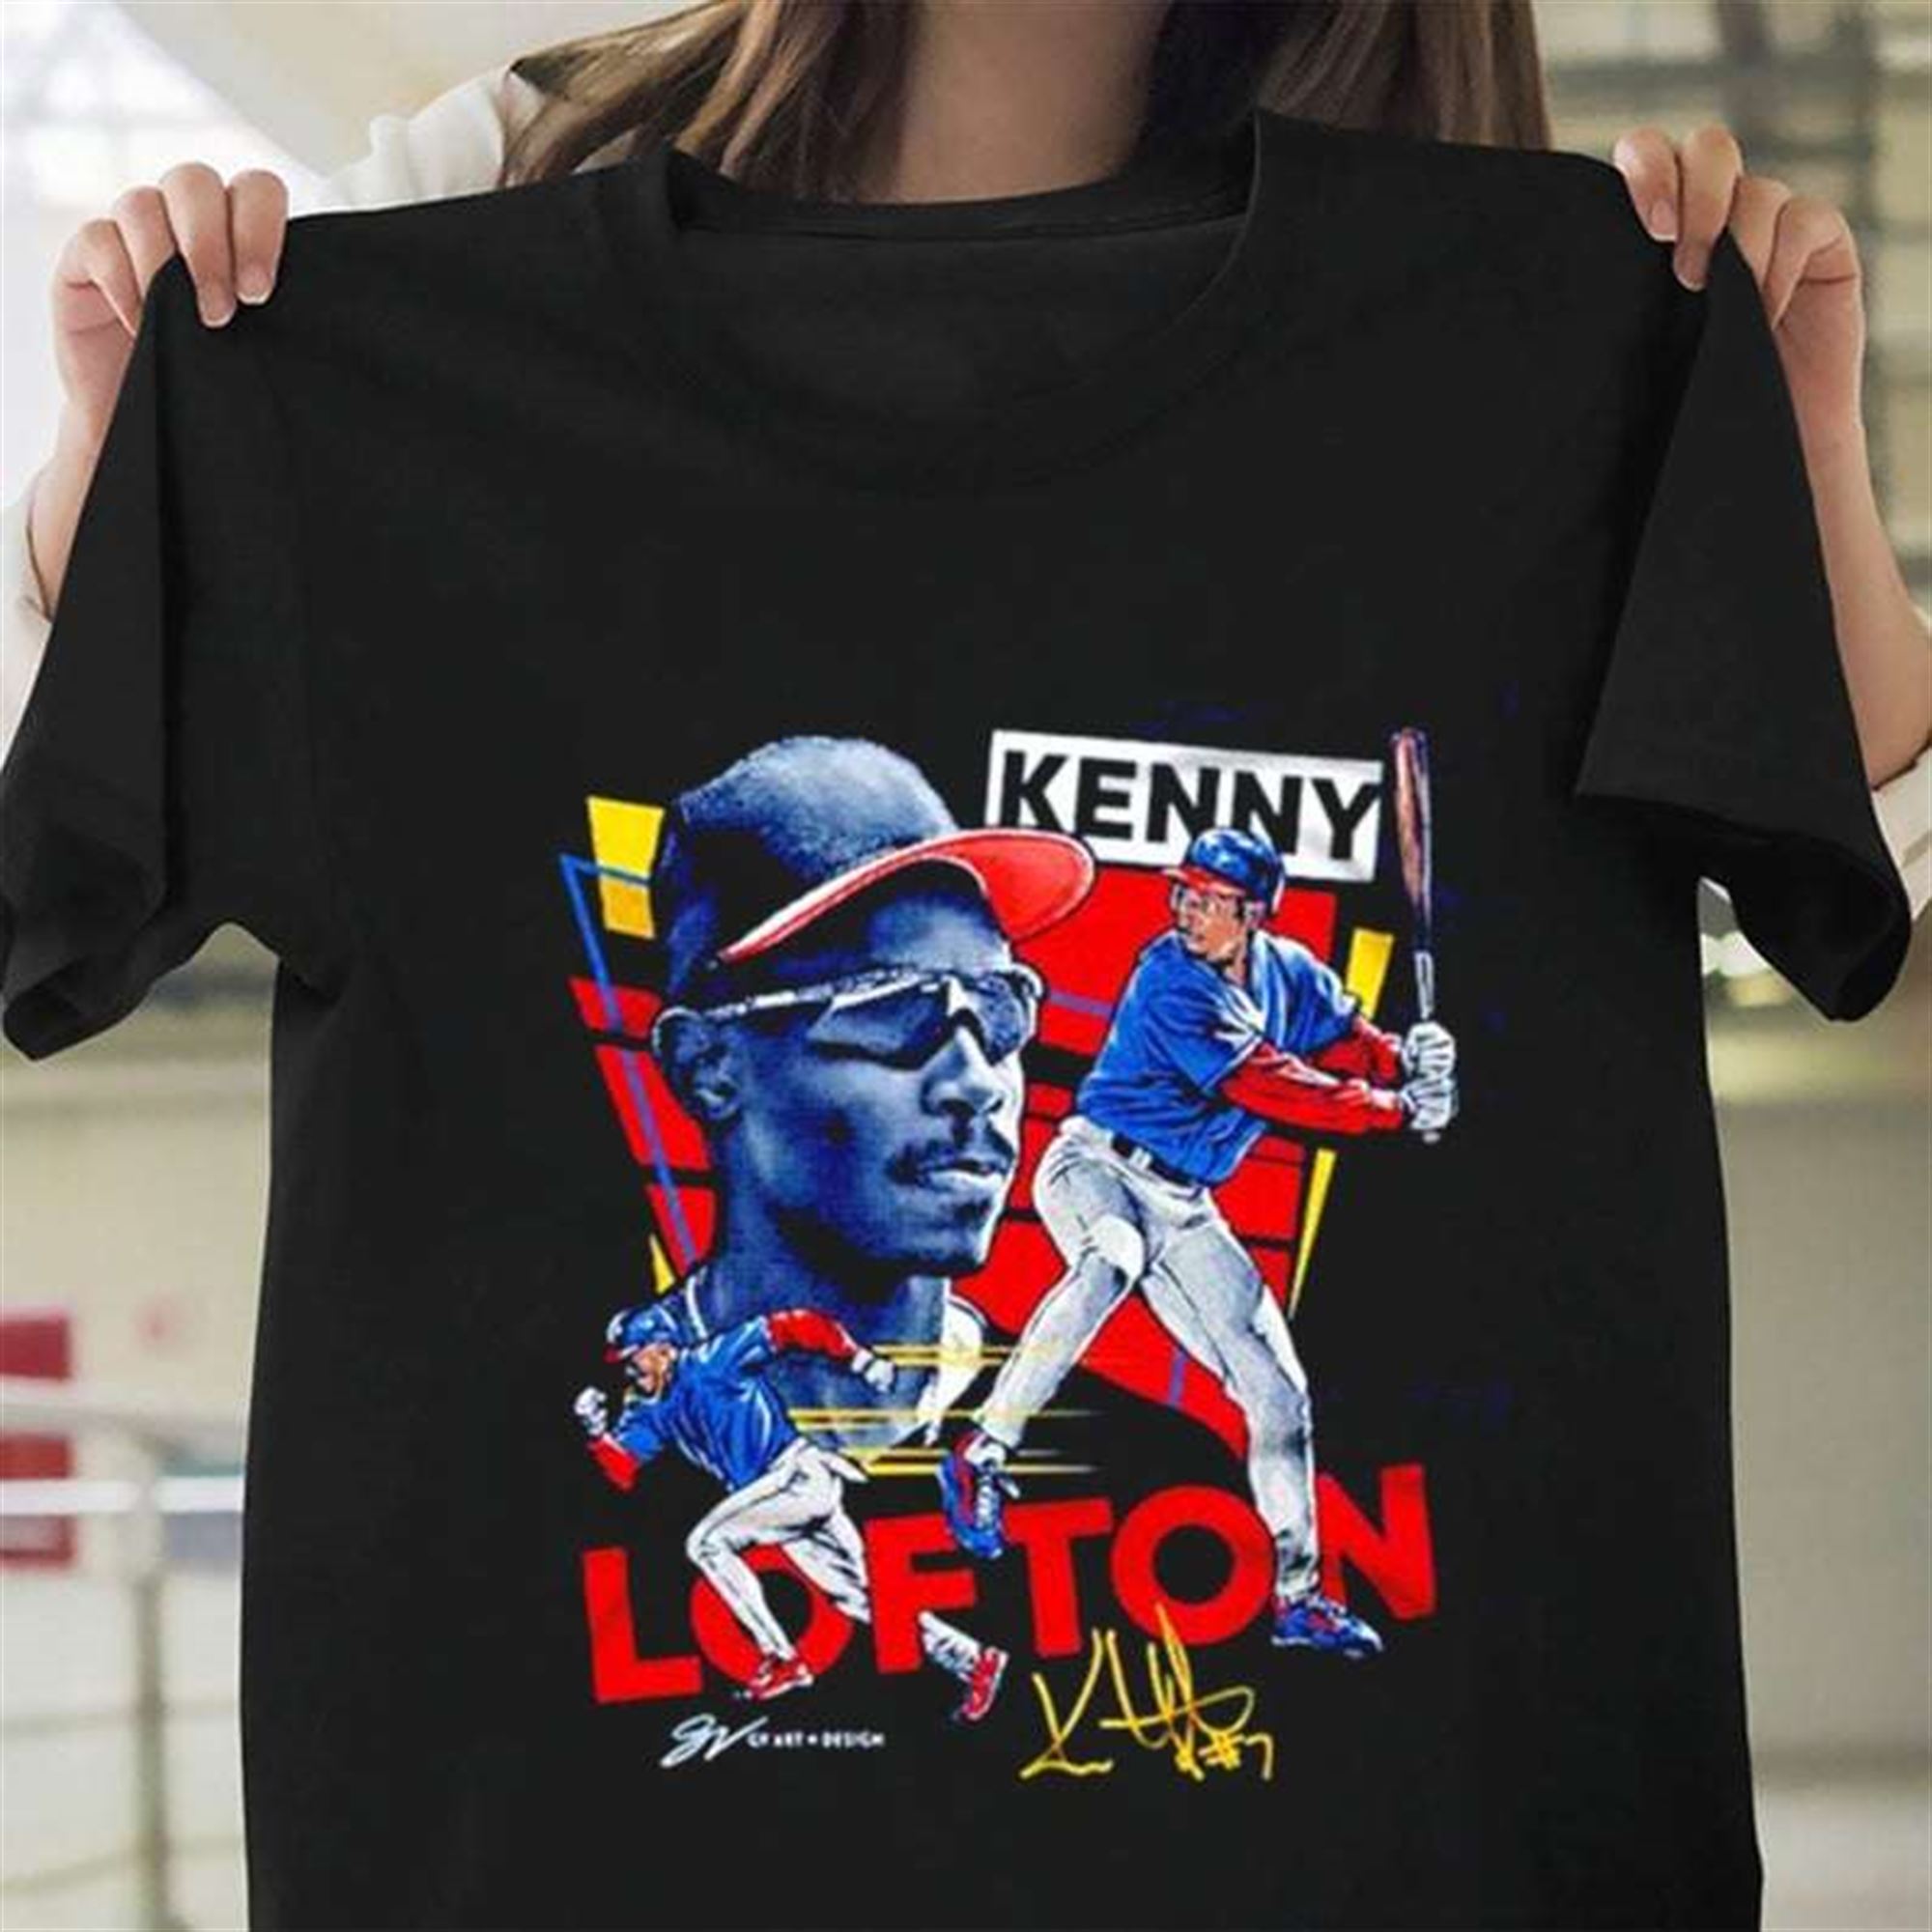 Kenny Lofton 2021 Cleveland Indians Baseball T-shirt Plus Size Up To 5x